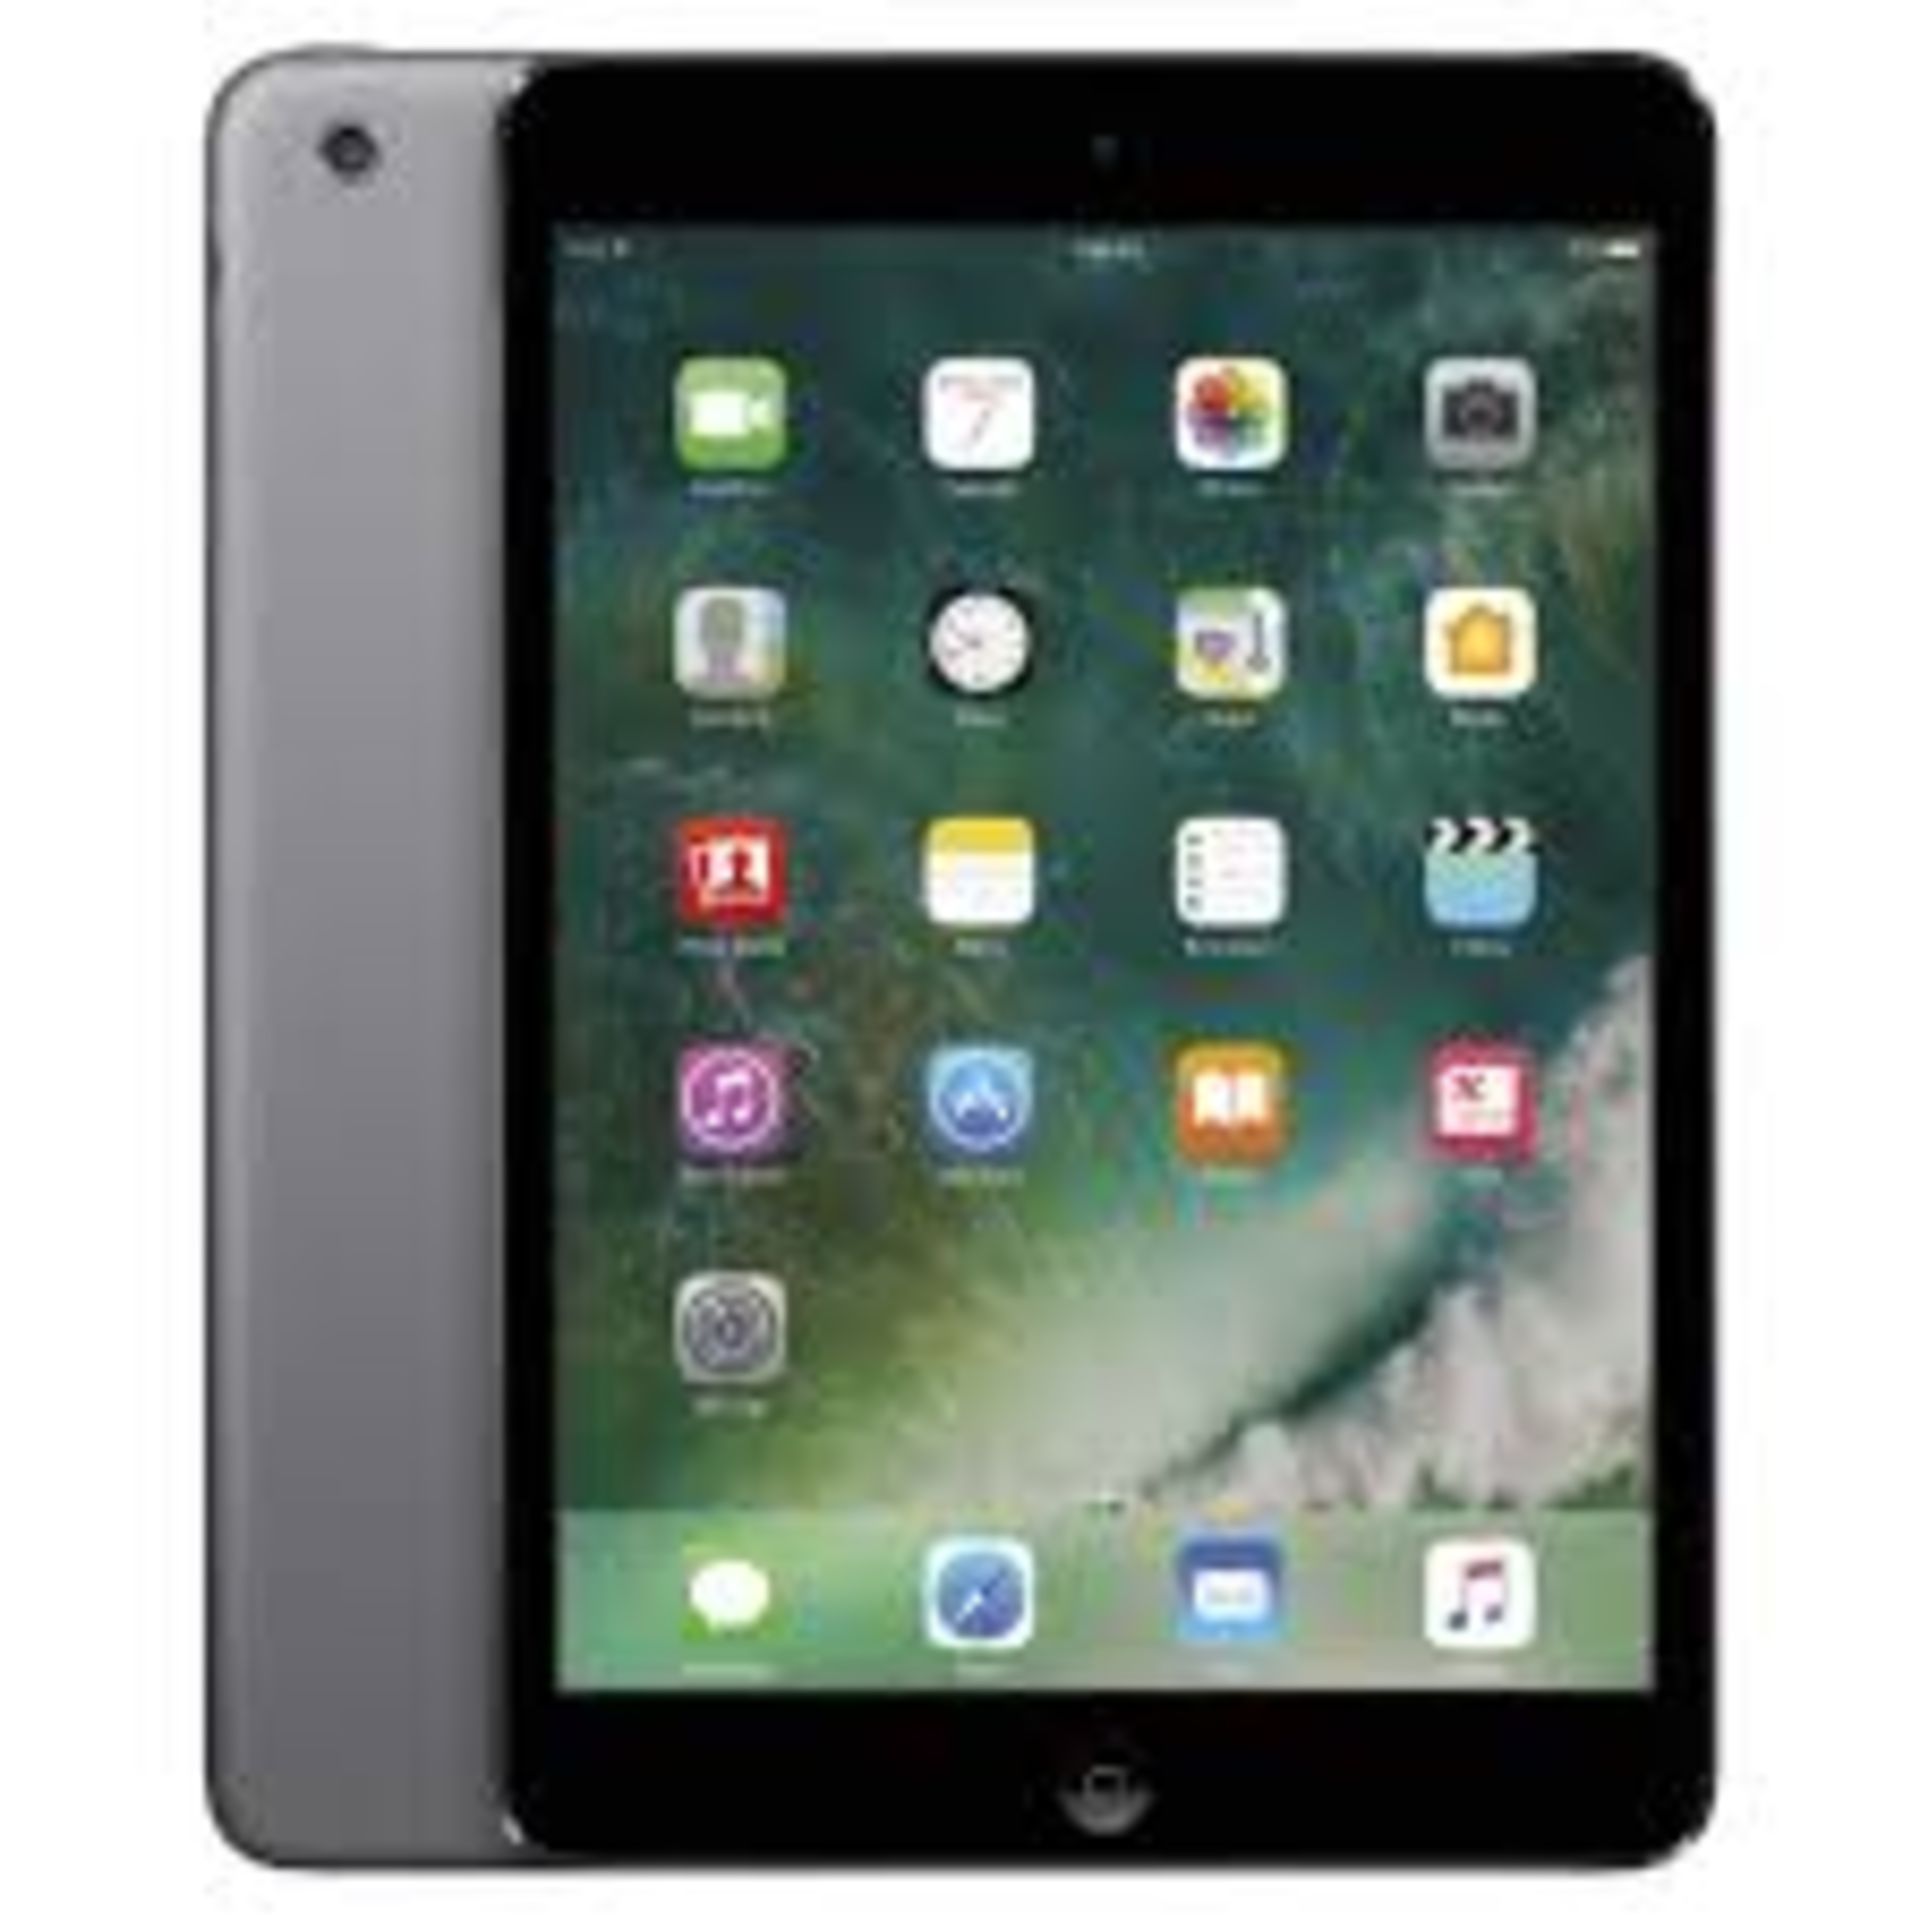 V Grade B Apple iPad Mini 2 16GB Space Grey - with box and accessories